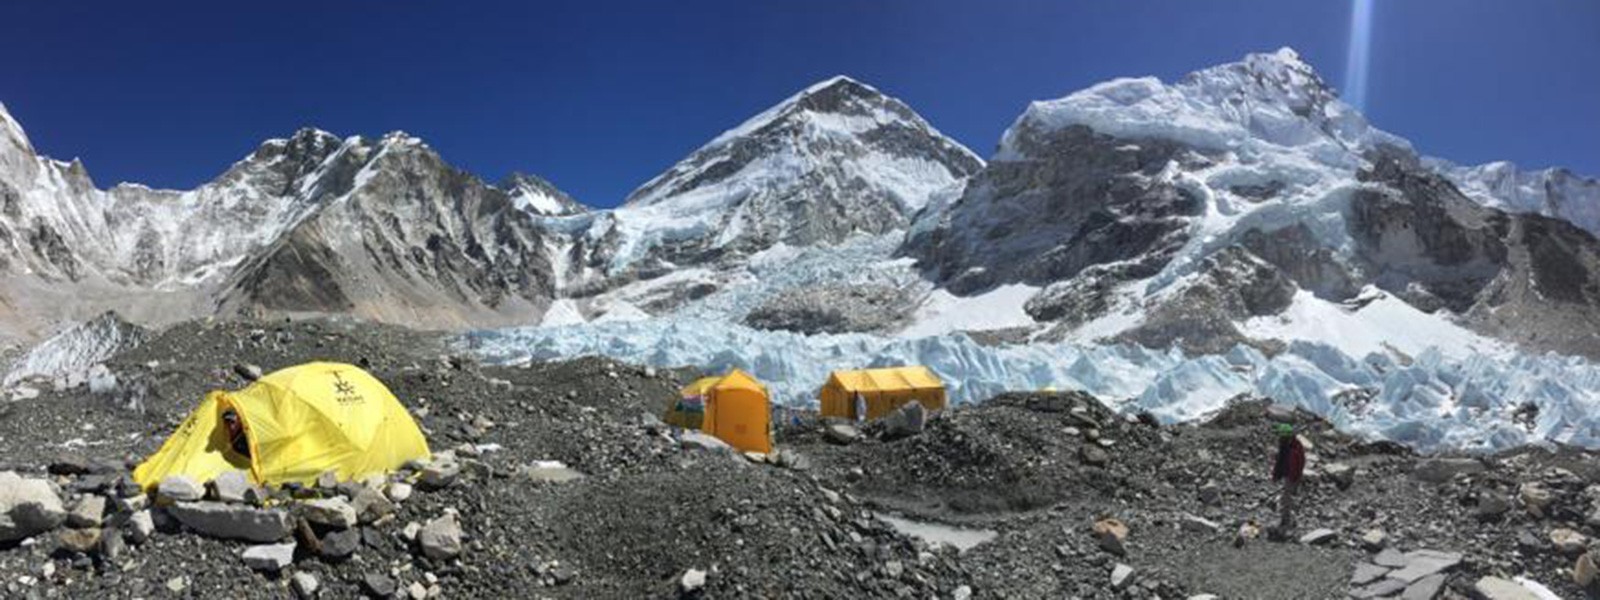 Everest Base Camp group